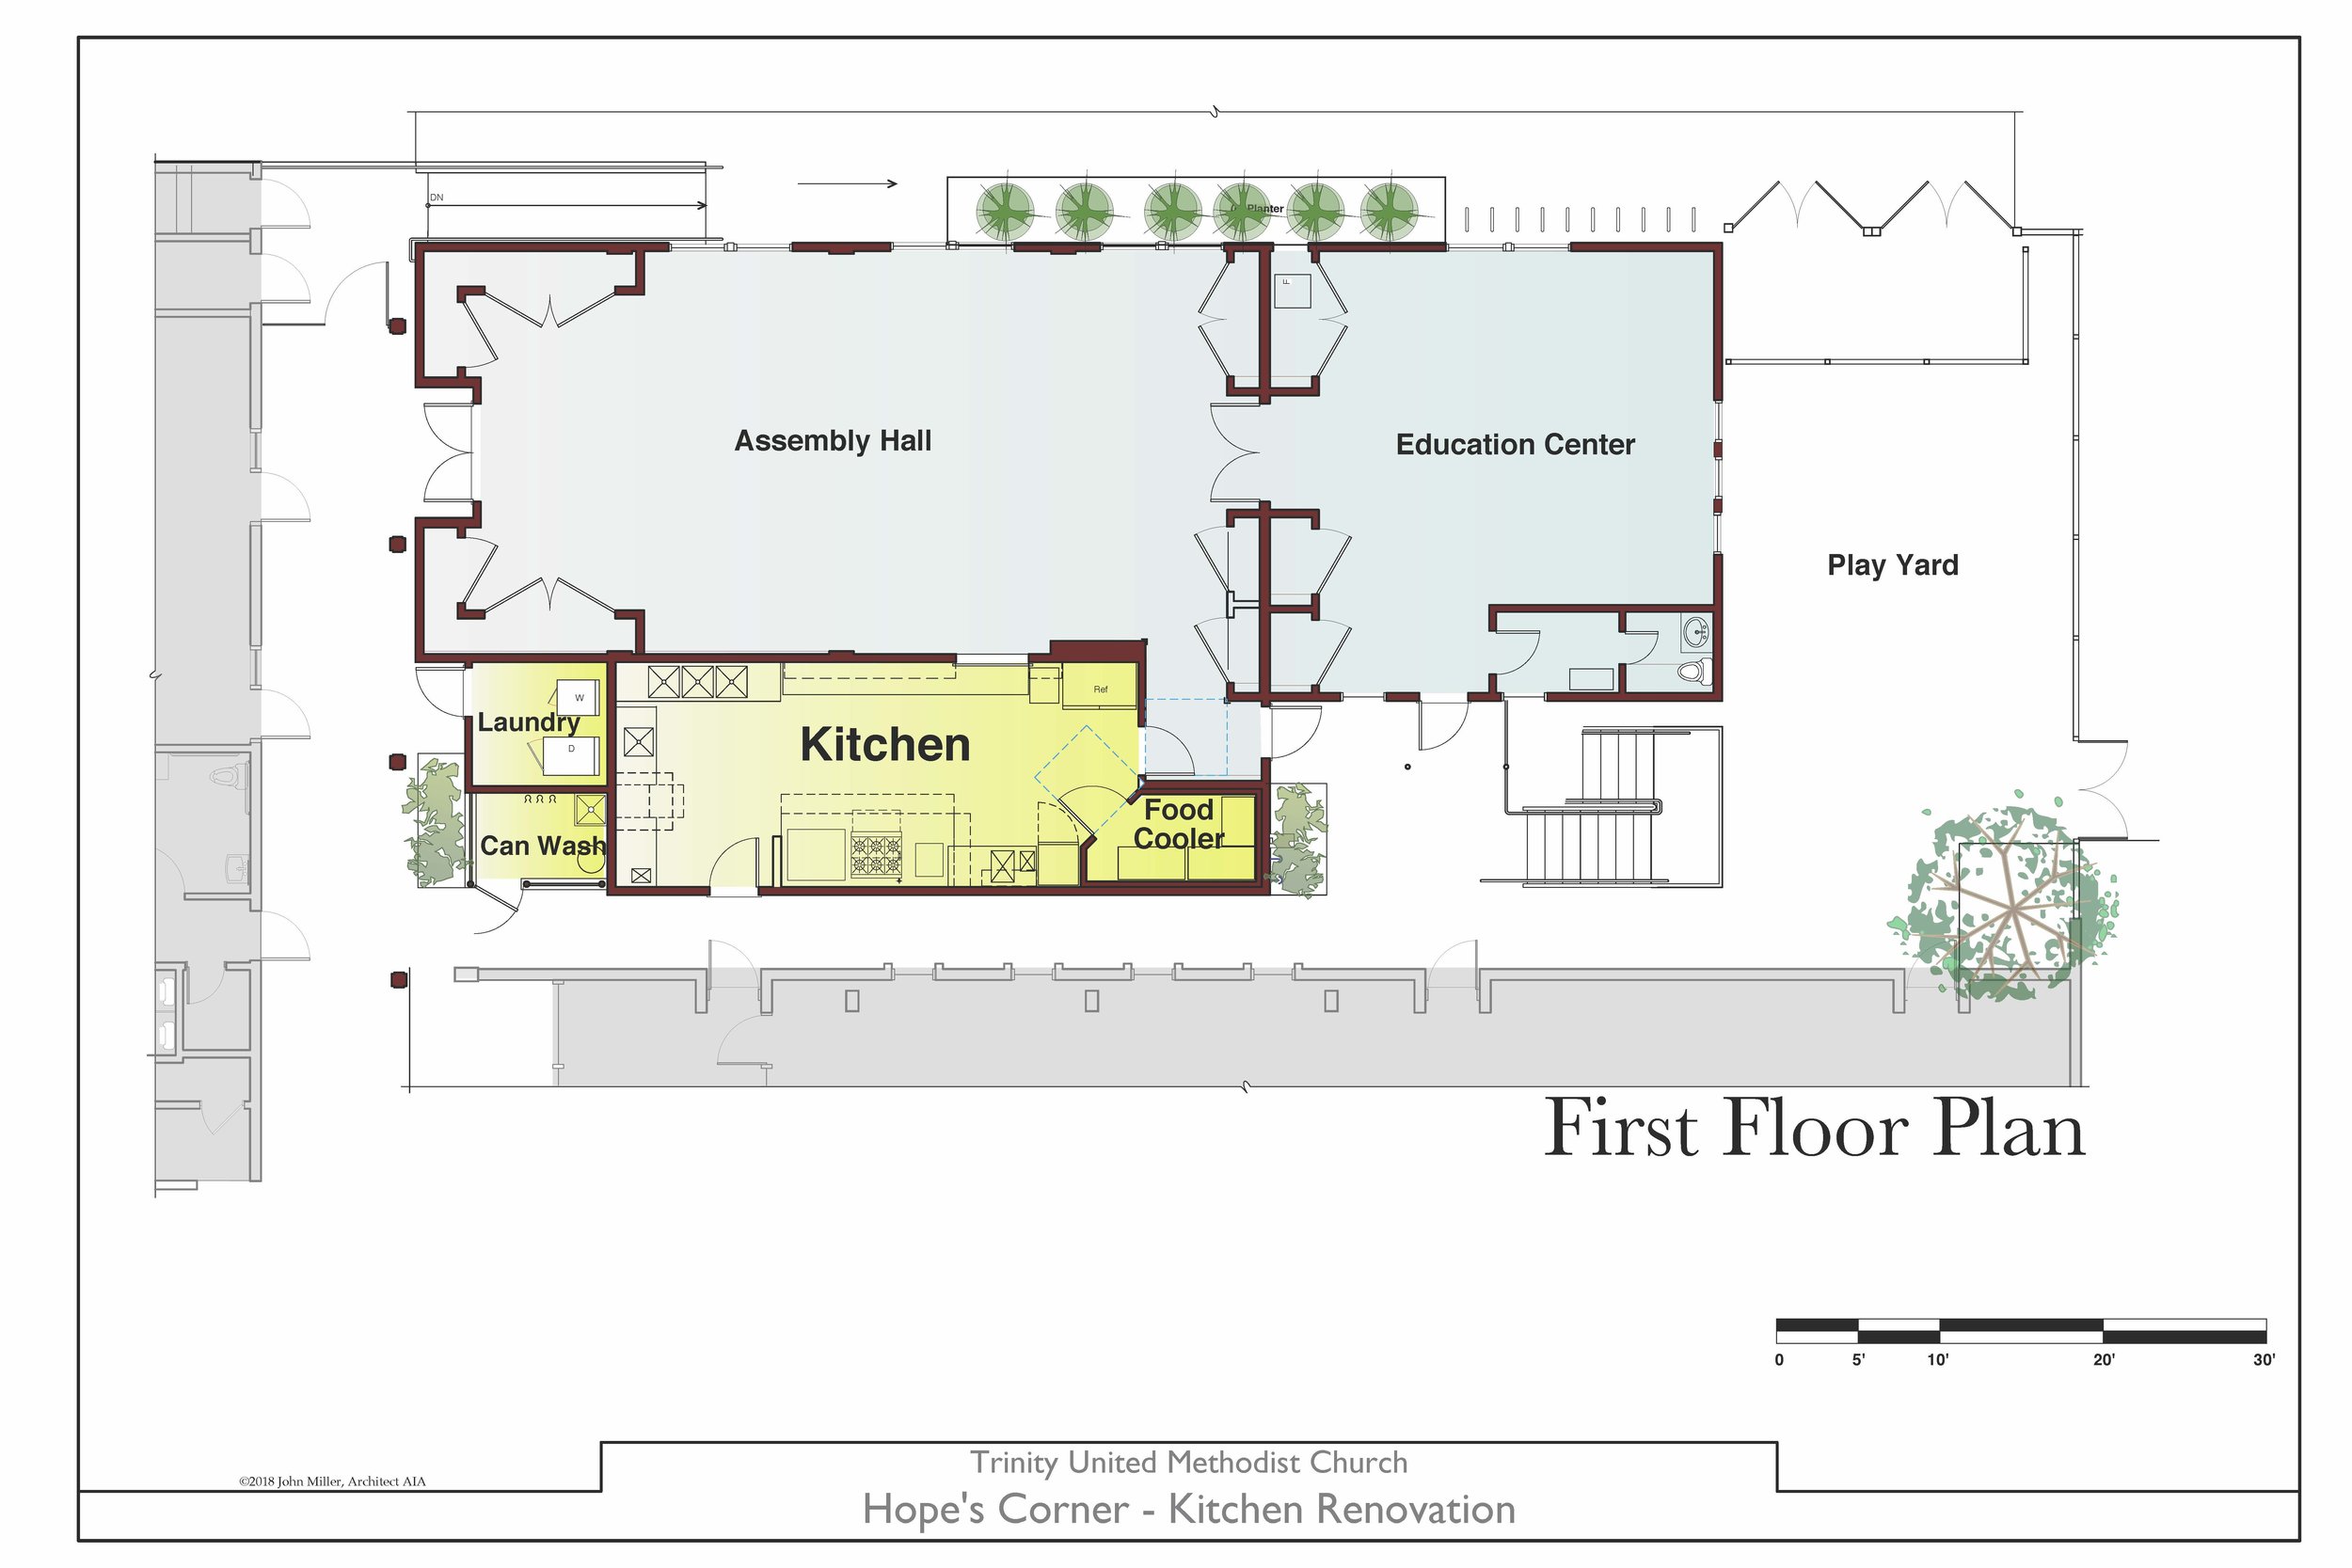 New kitchen floor plan